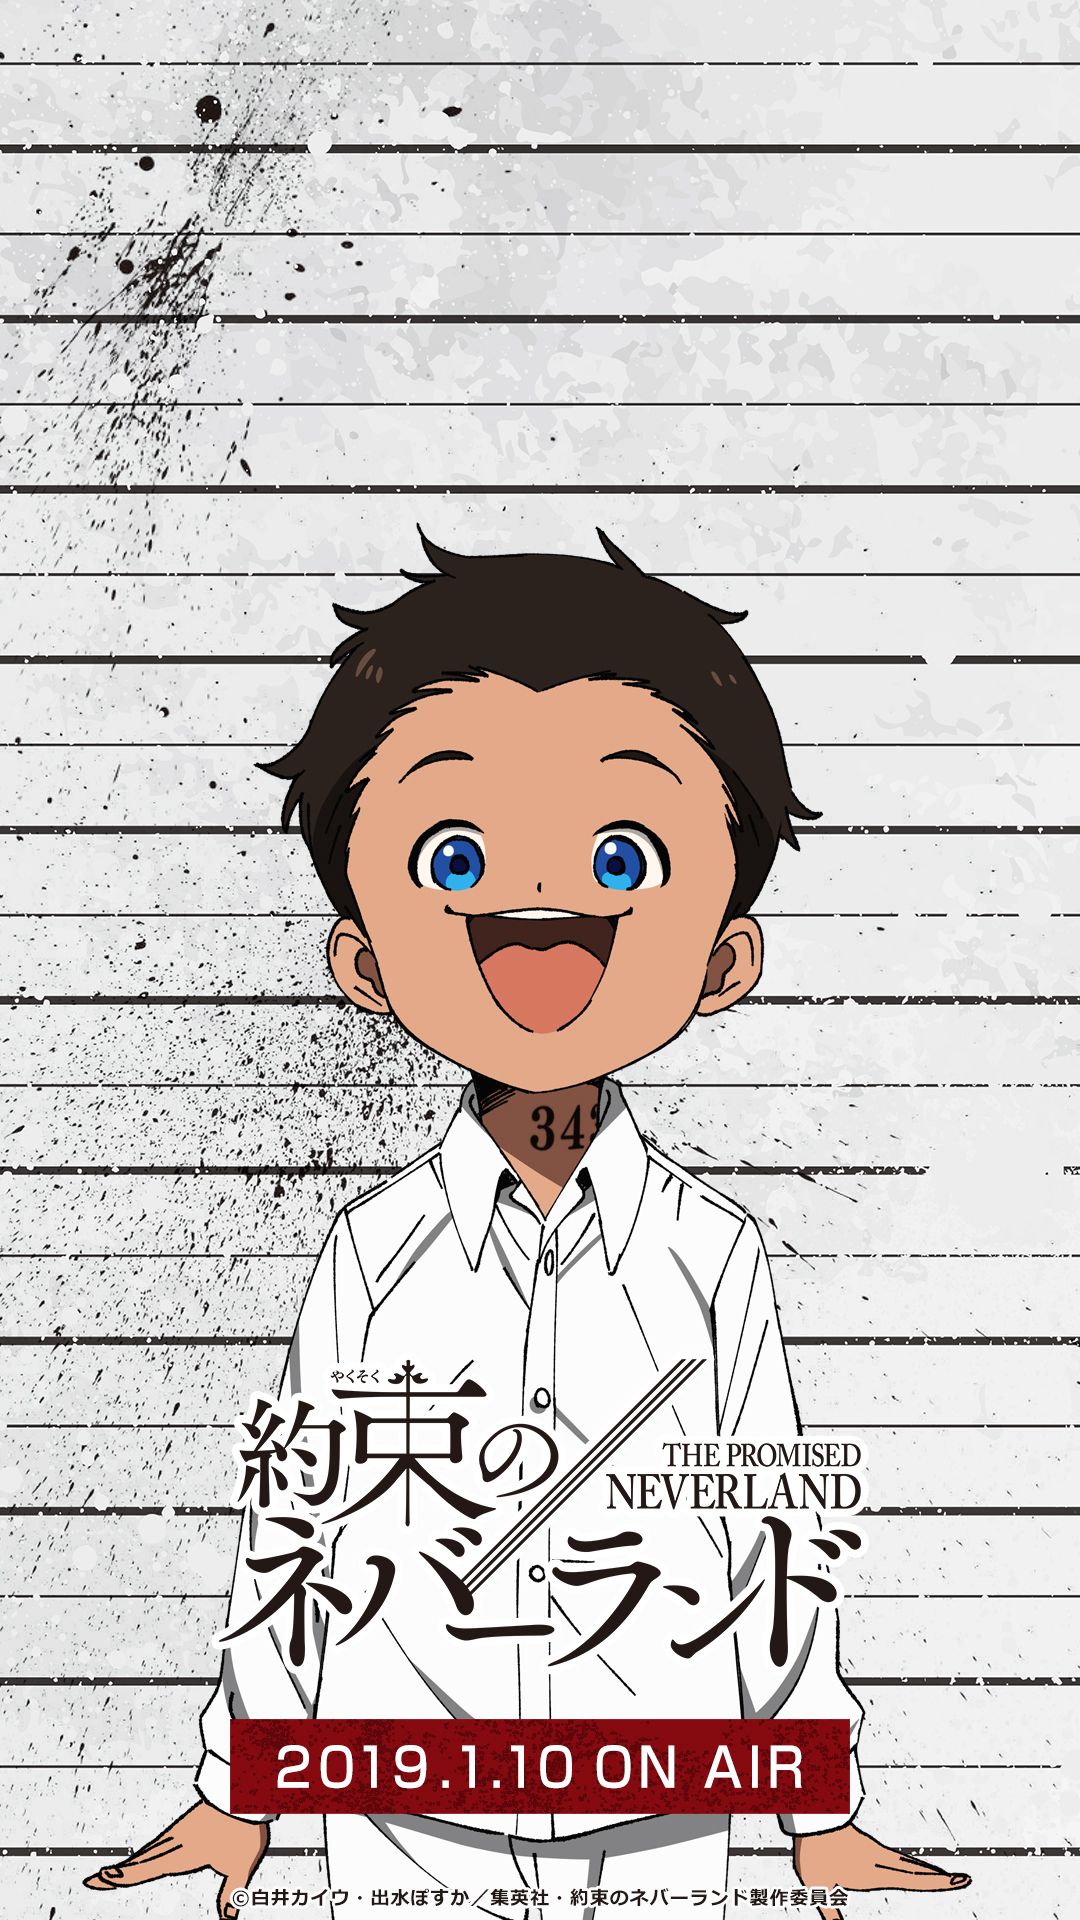 Yakusoku no Neverland (The Promised Neverland), Wallpaper Anime Image Board